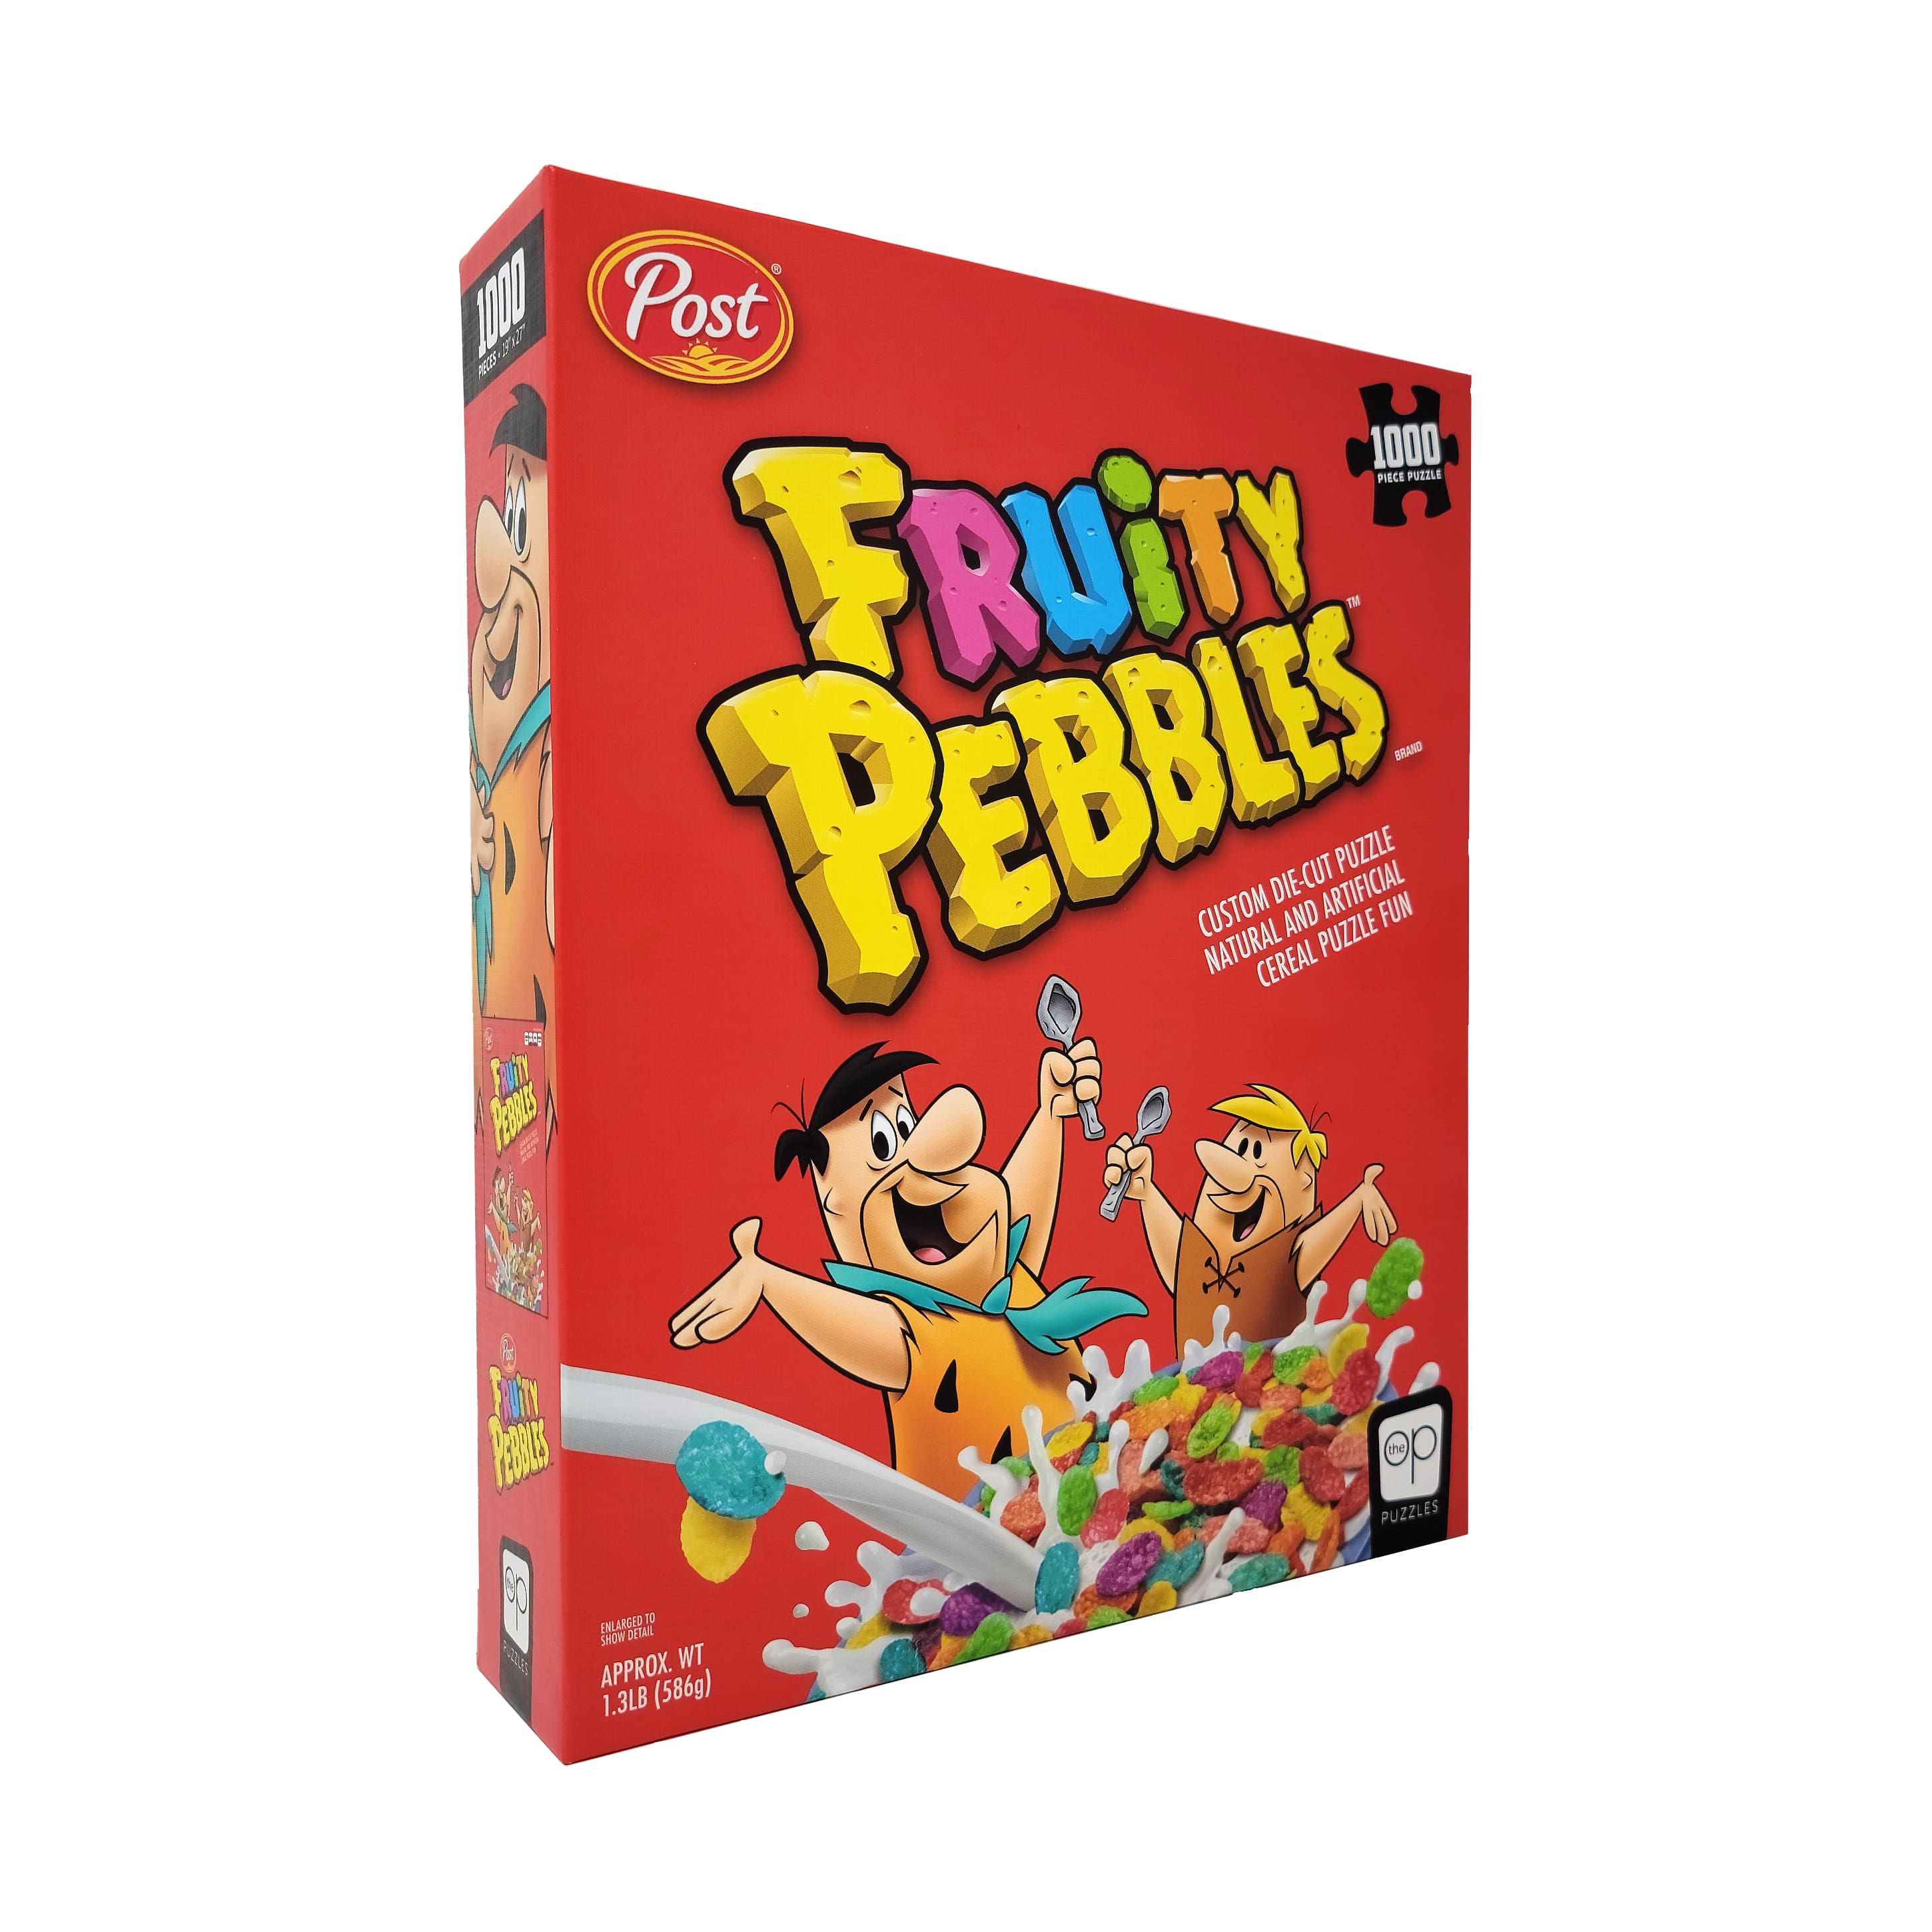 Post Cereal - Fruity Pebbles Puzzle: 1000 Pcs